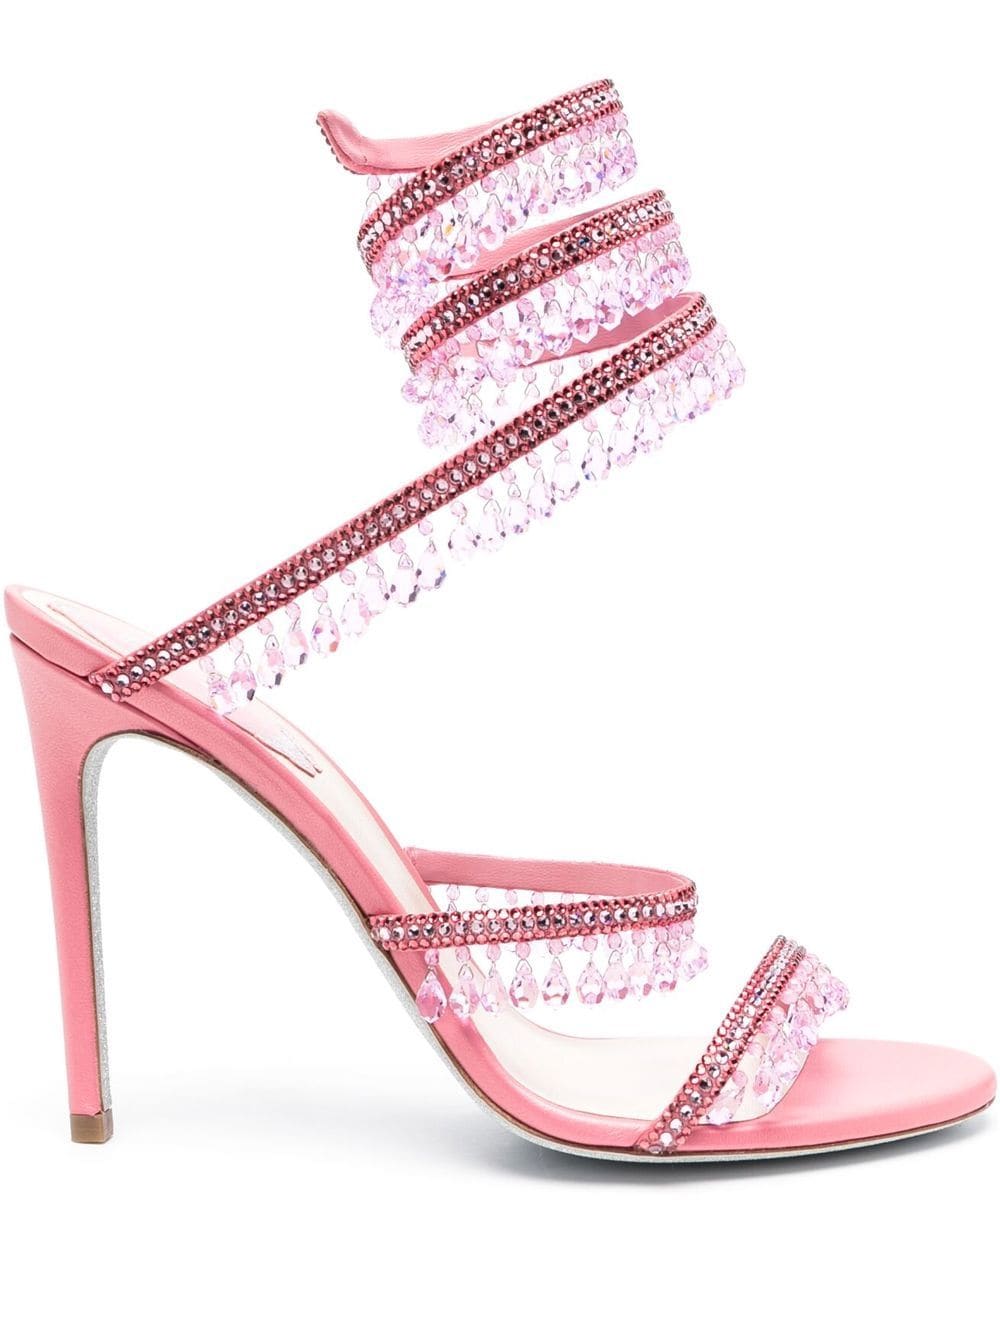 René Caovilla 105mm Satin Chandelier Sandals In Pink | ModeSens